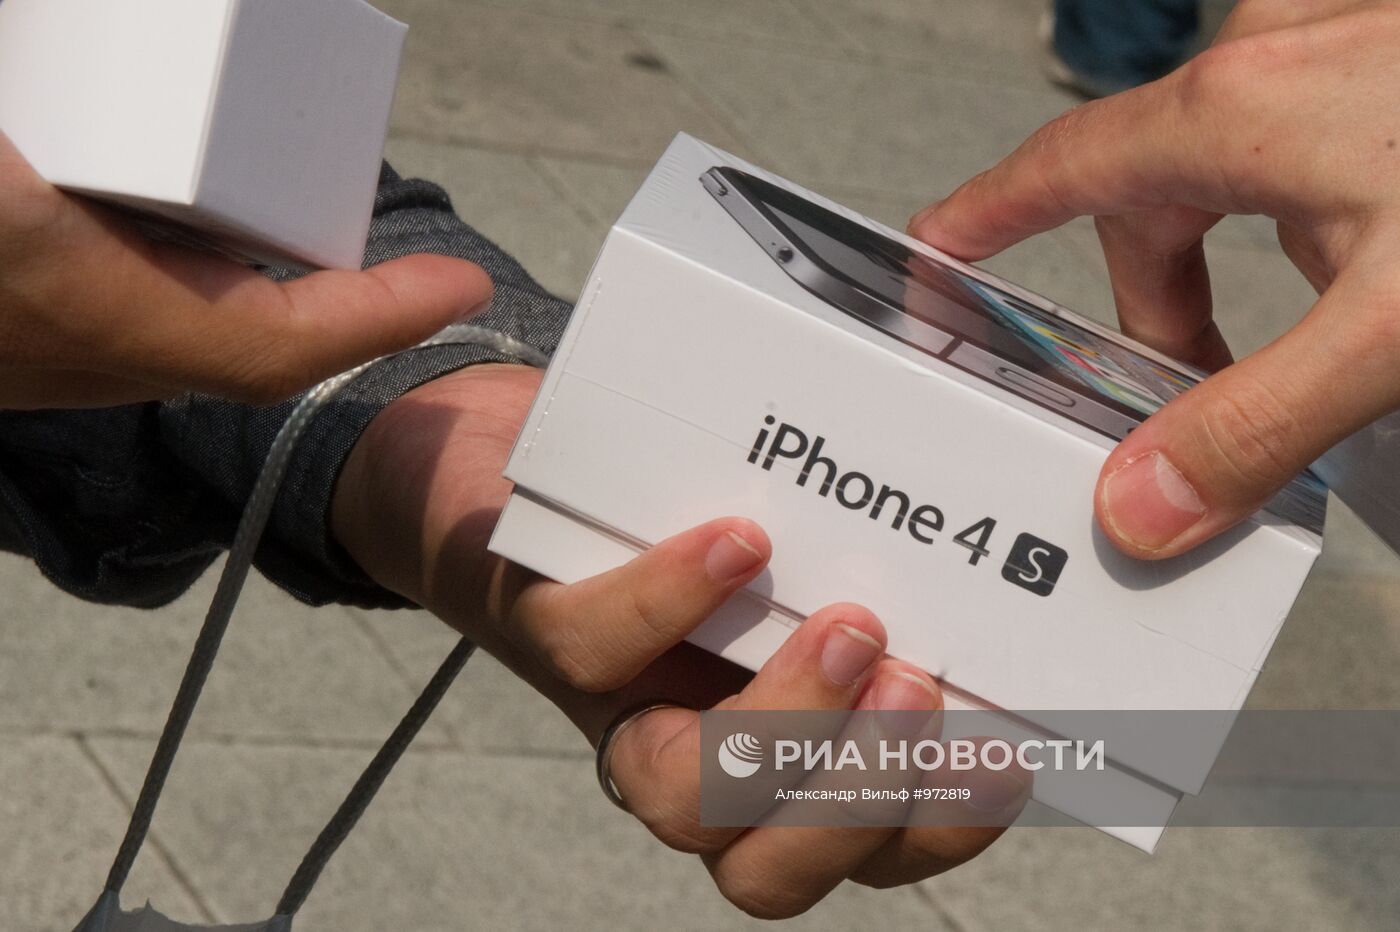 Начались продажи нового iPhone 4S